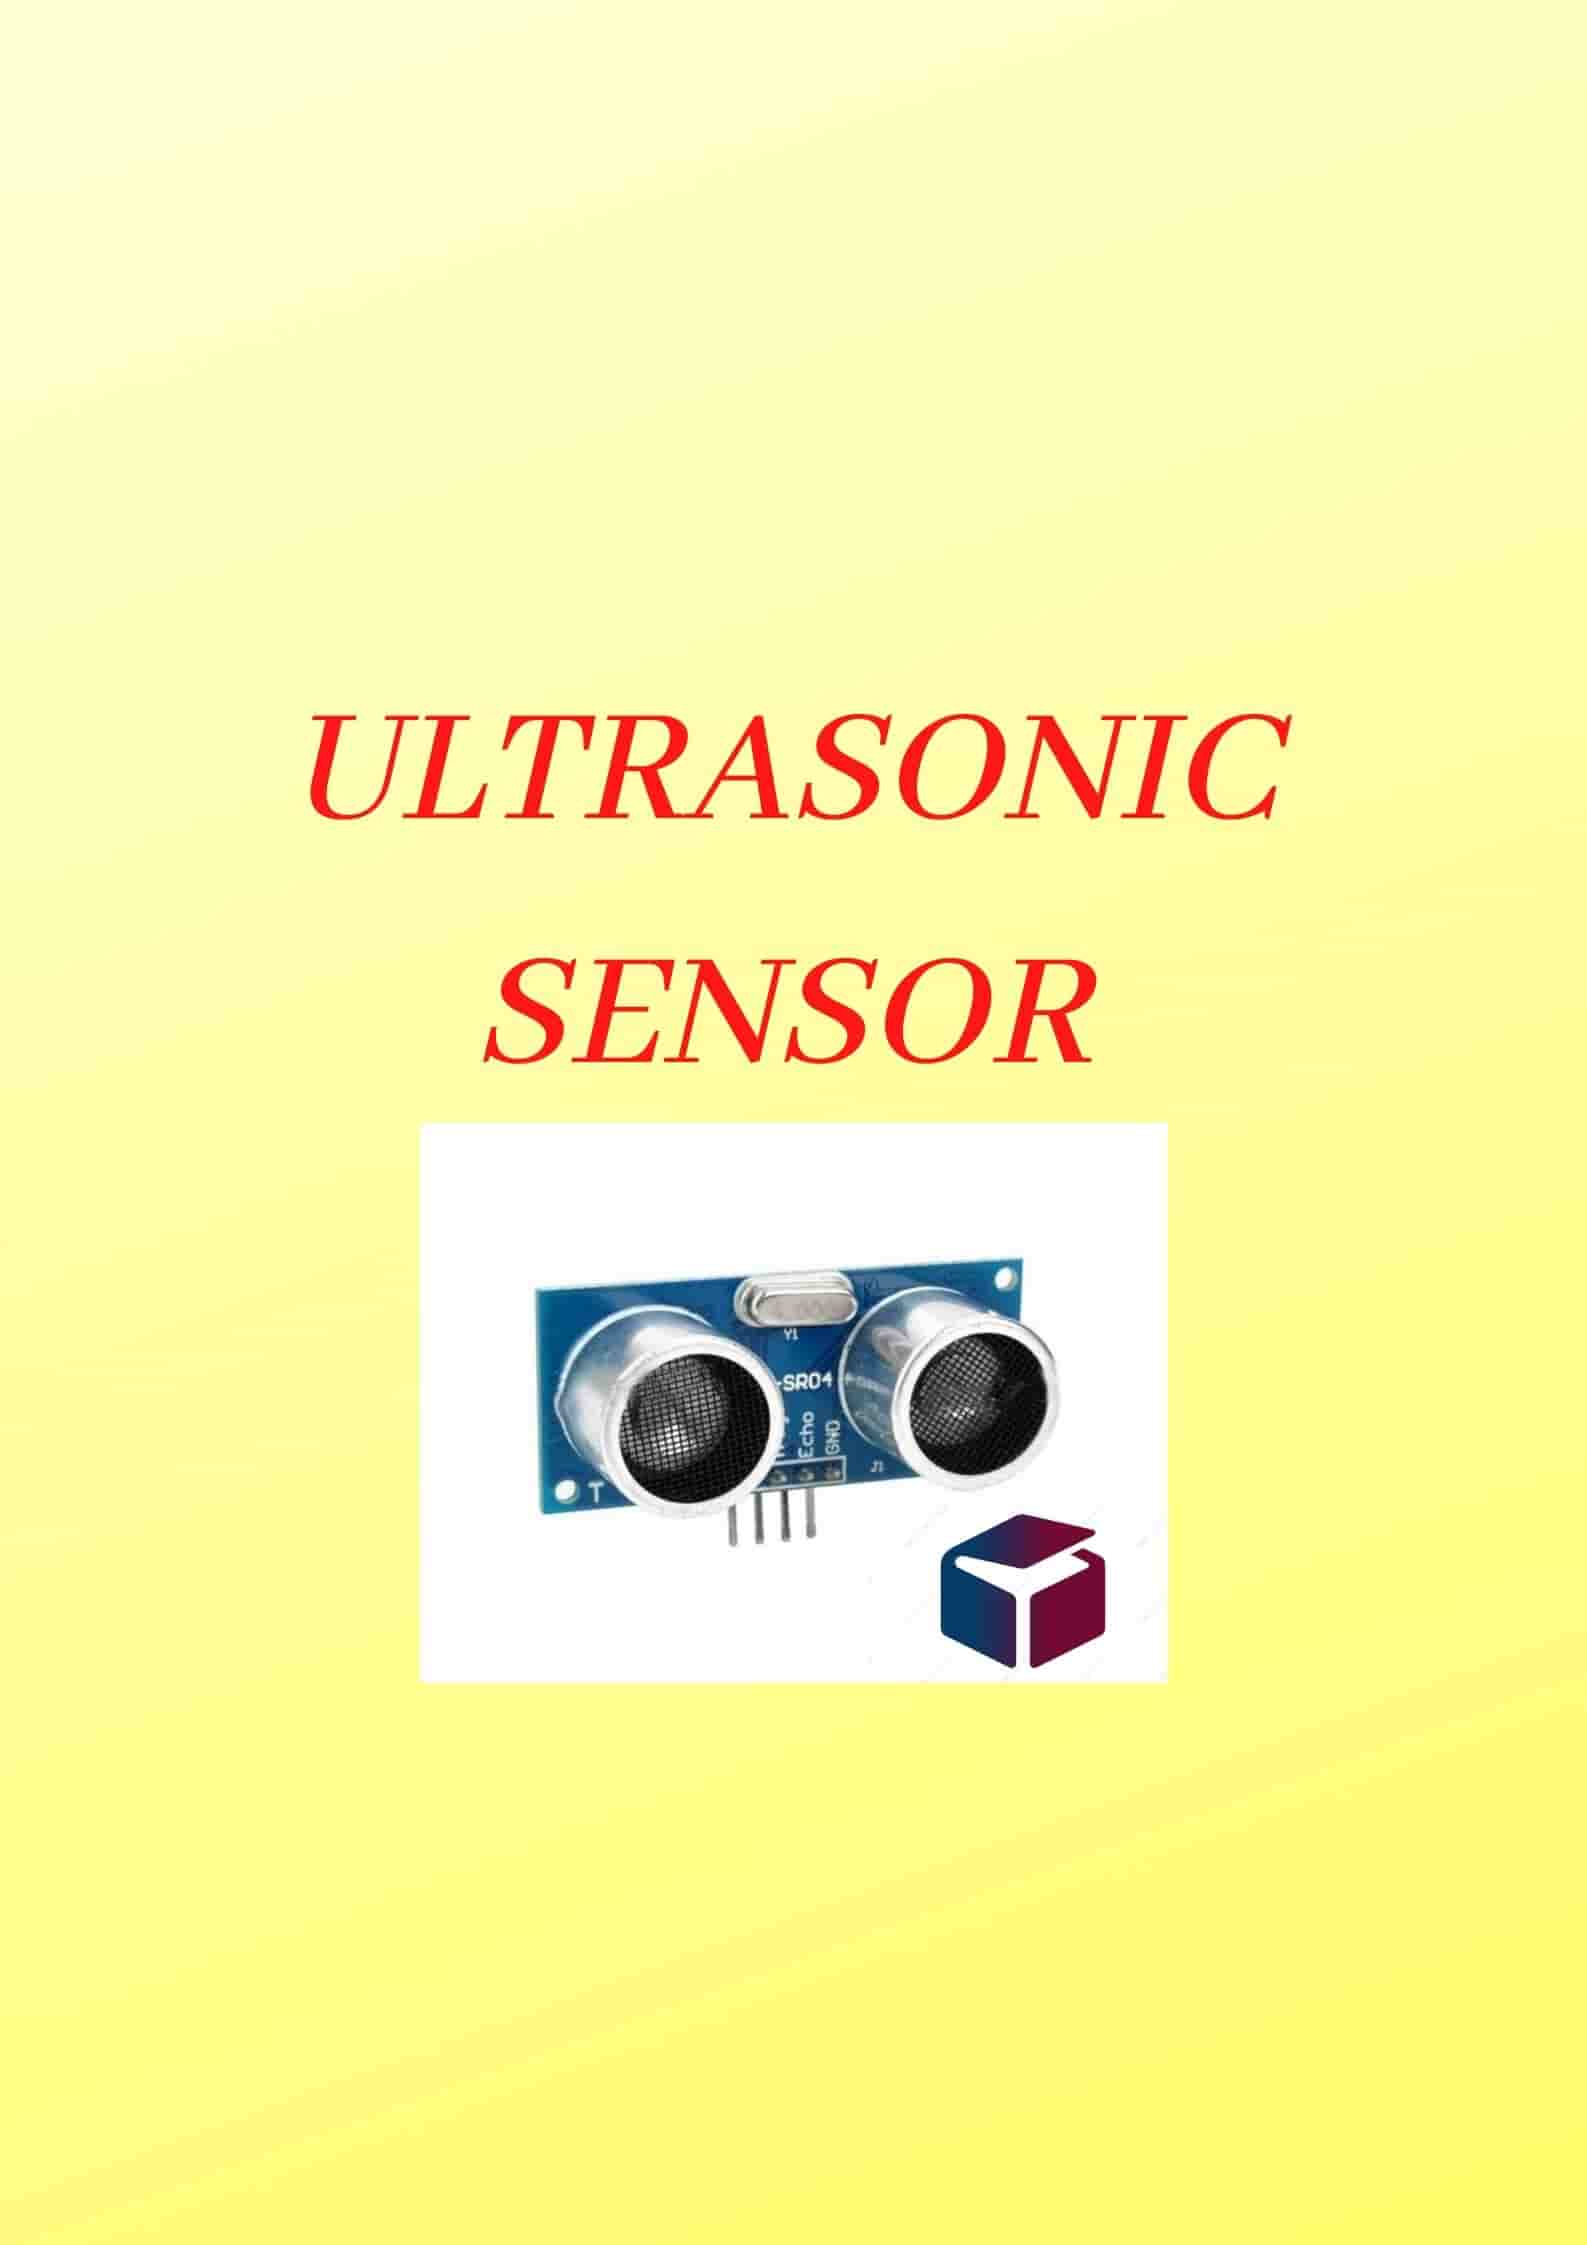 ultrasonic sensor working featured